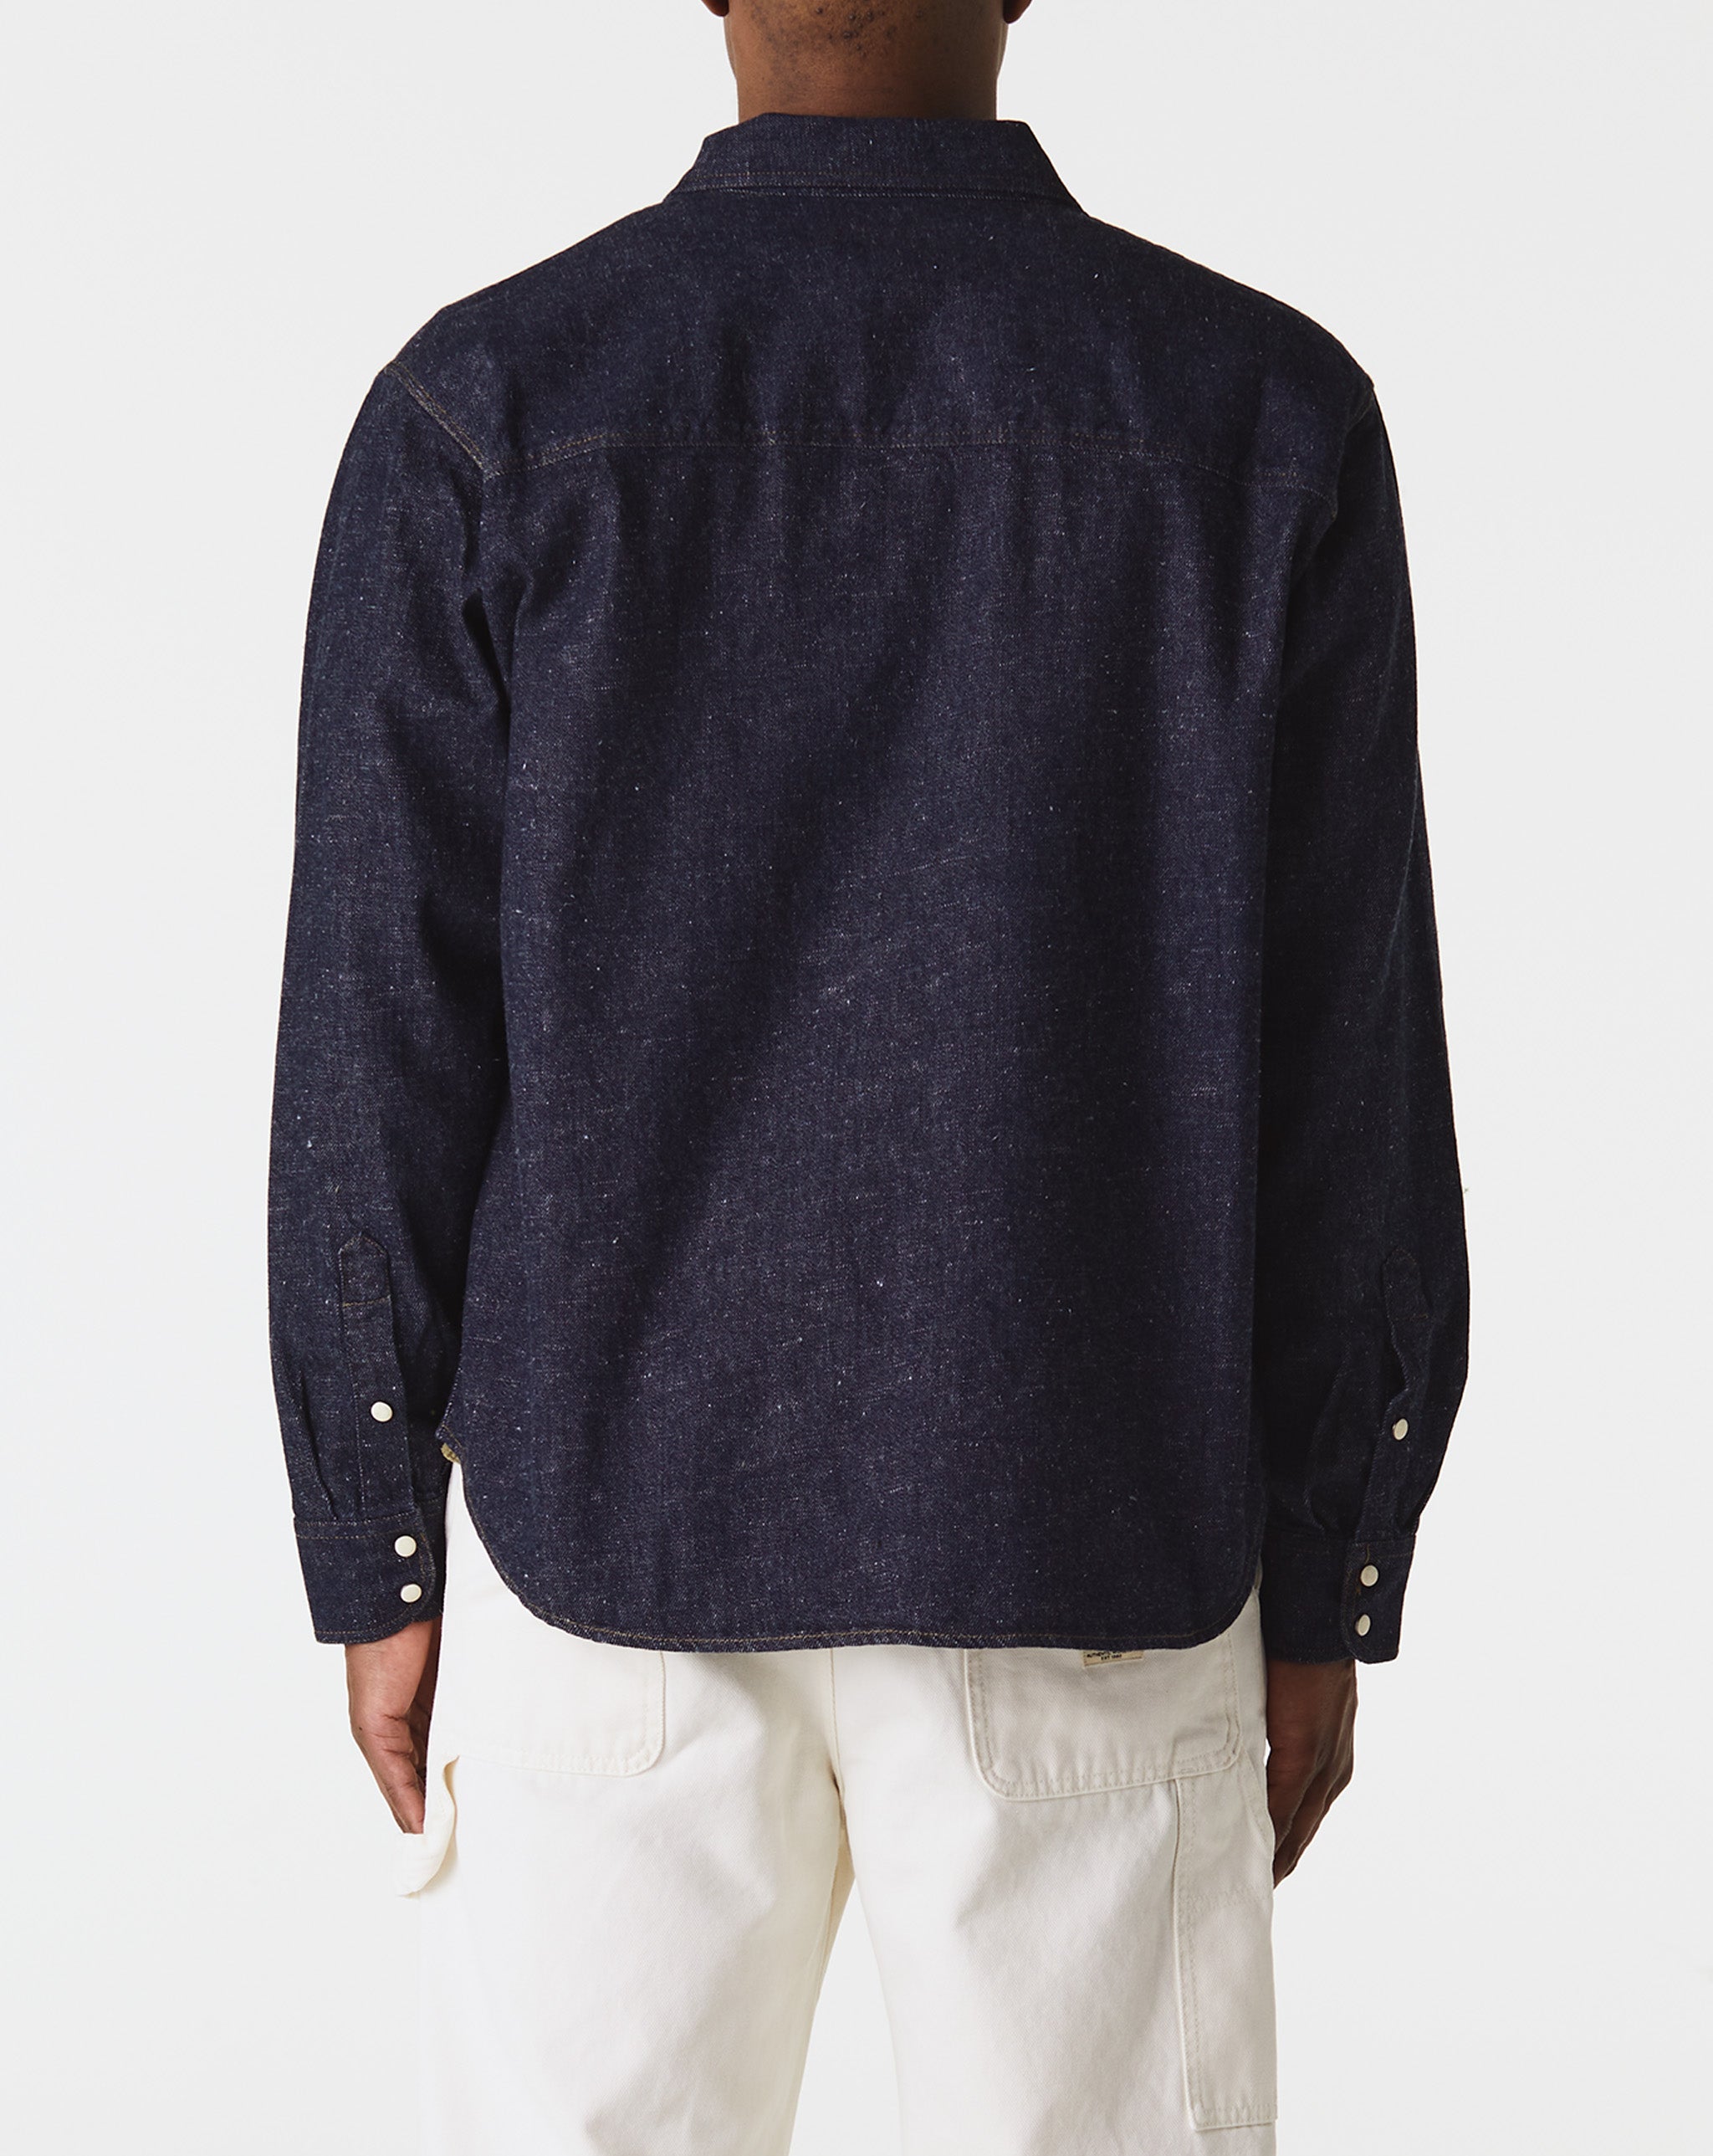 Stüssy wool sweater chloe pullover  - Cheap Atelier-lumieres Jordan outlet